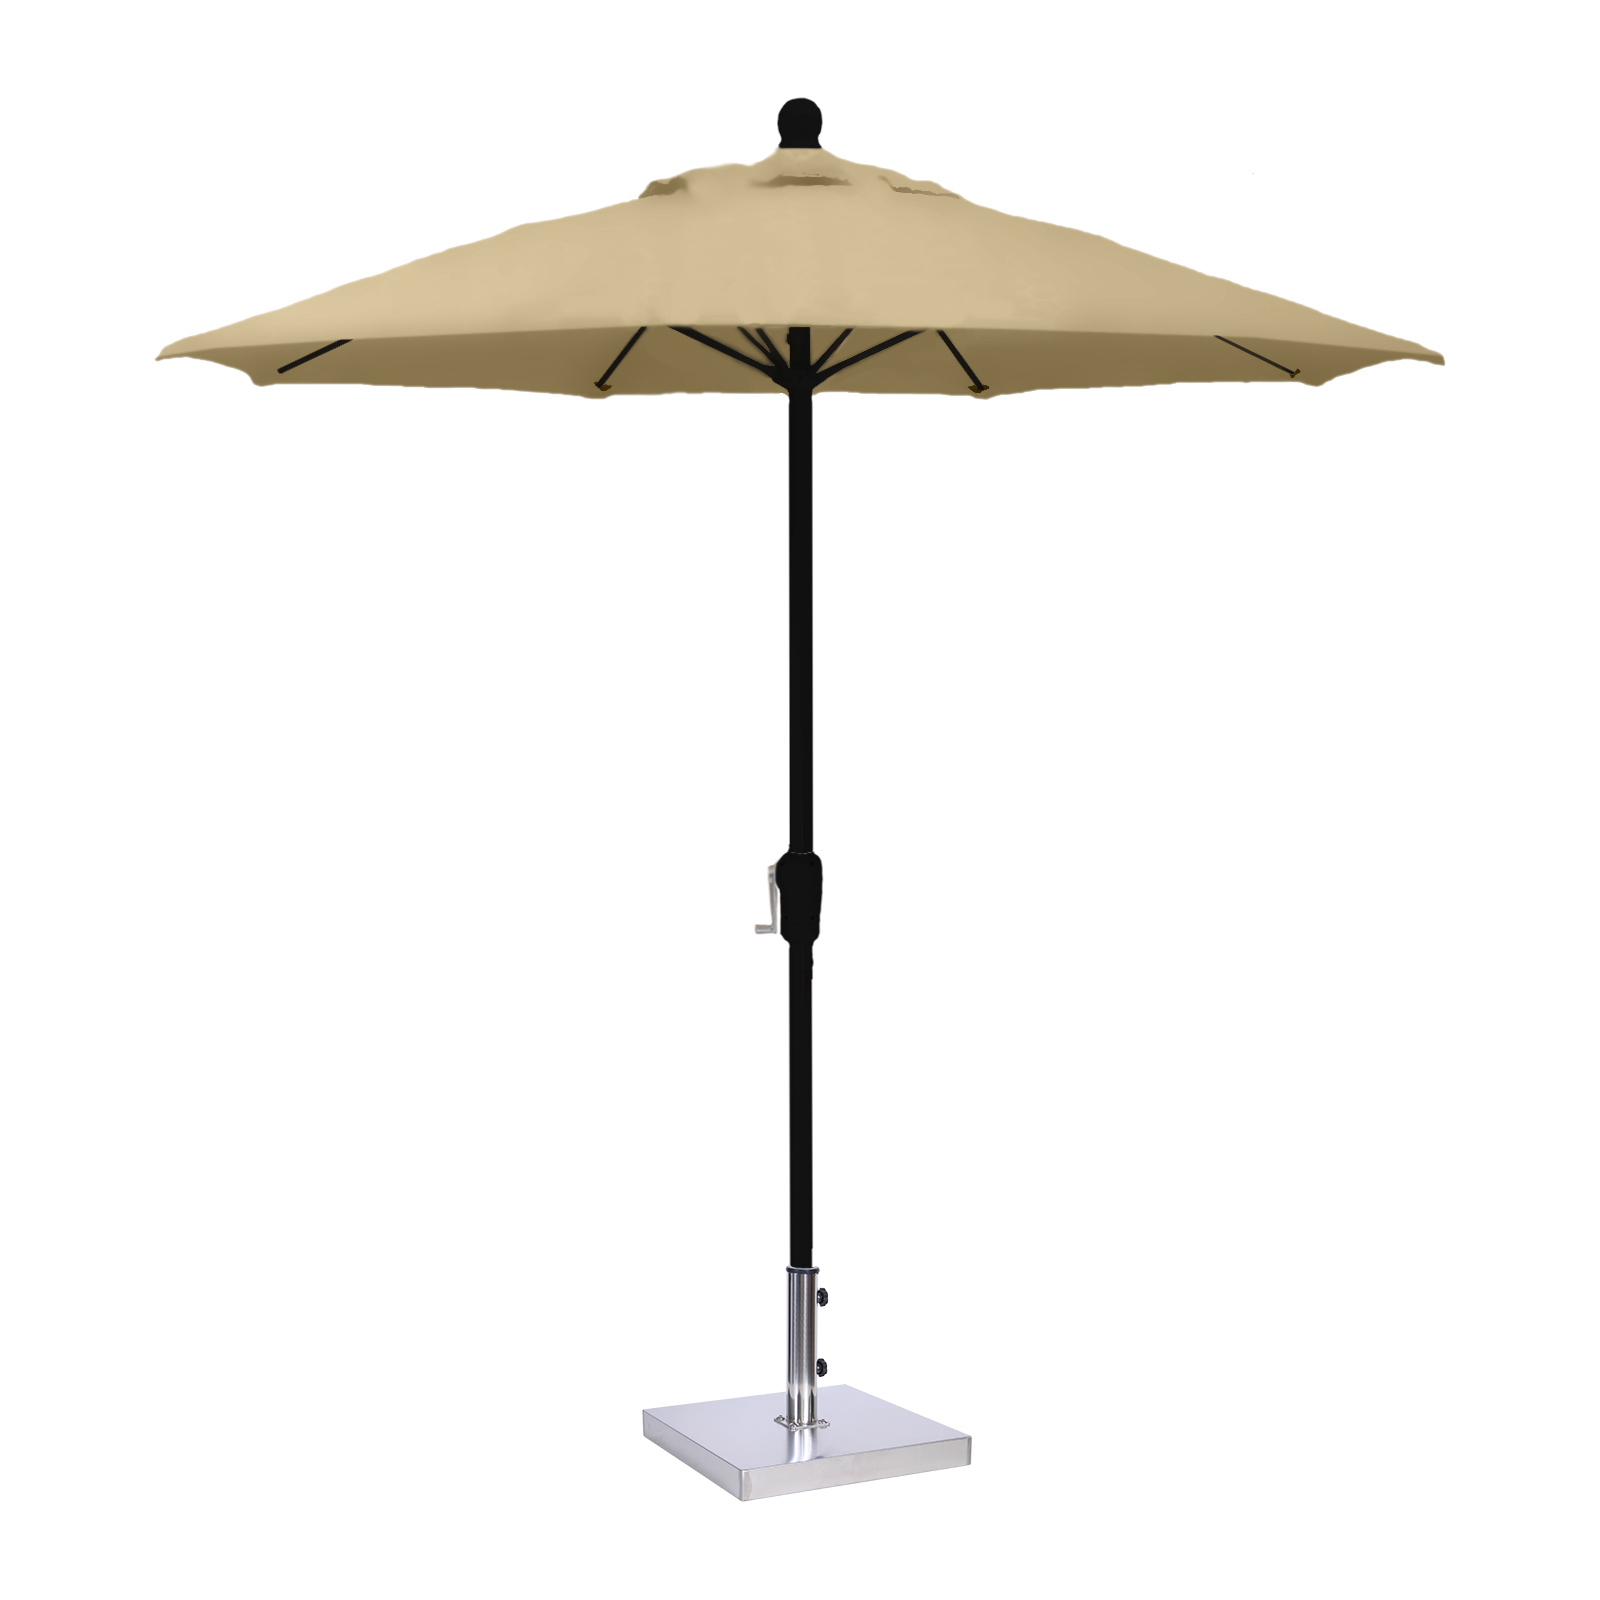 MiYu Furniture  9 ft Fiberglass Market Umbrella with Crank - Black Frame